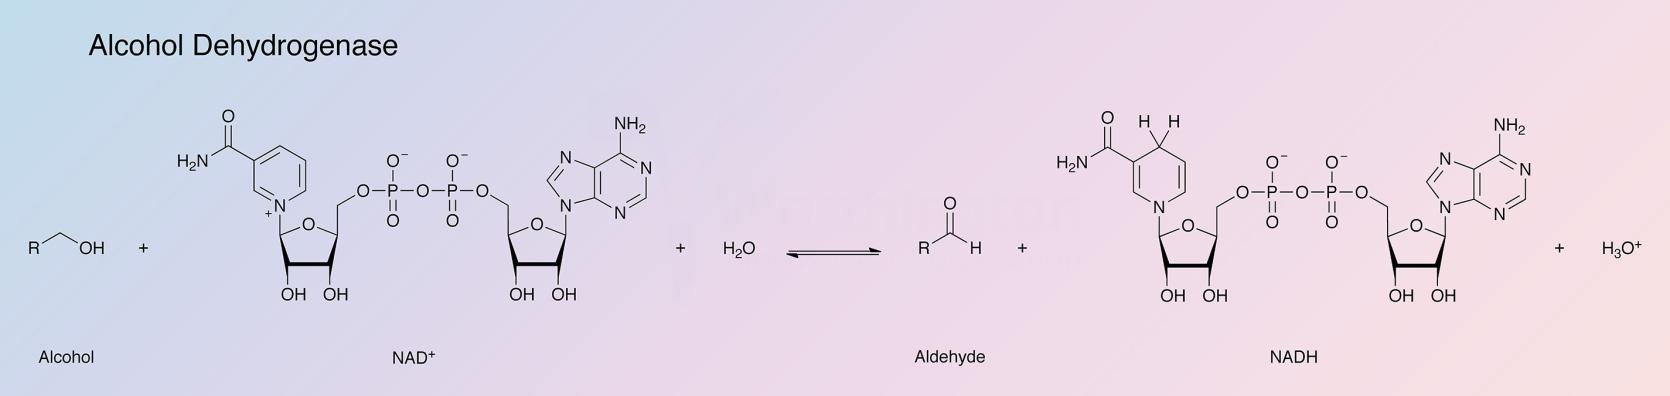 Alcohol Dehydrogenase Enzymatic Reaction